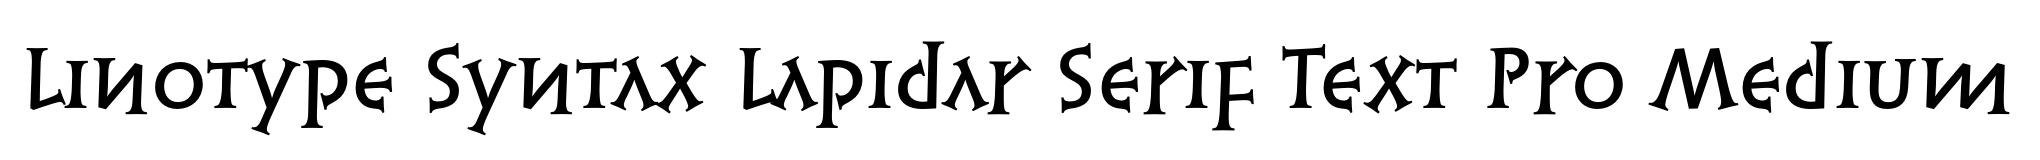 Linotype Syntax Lapidar Serif Text Pro Medium image